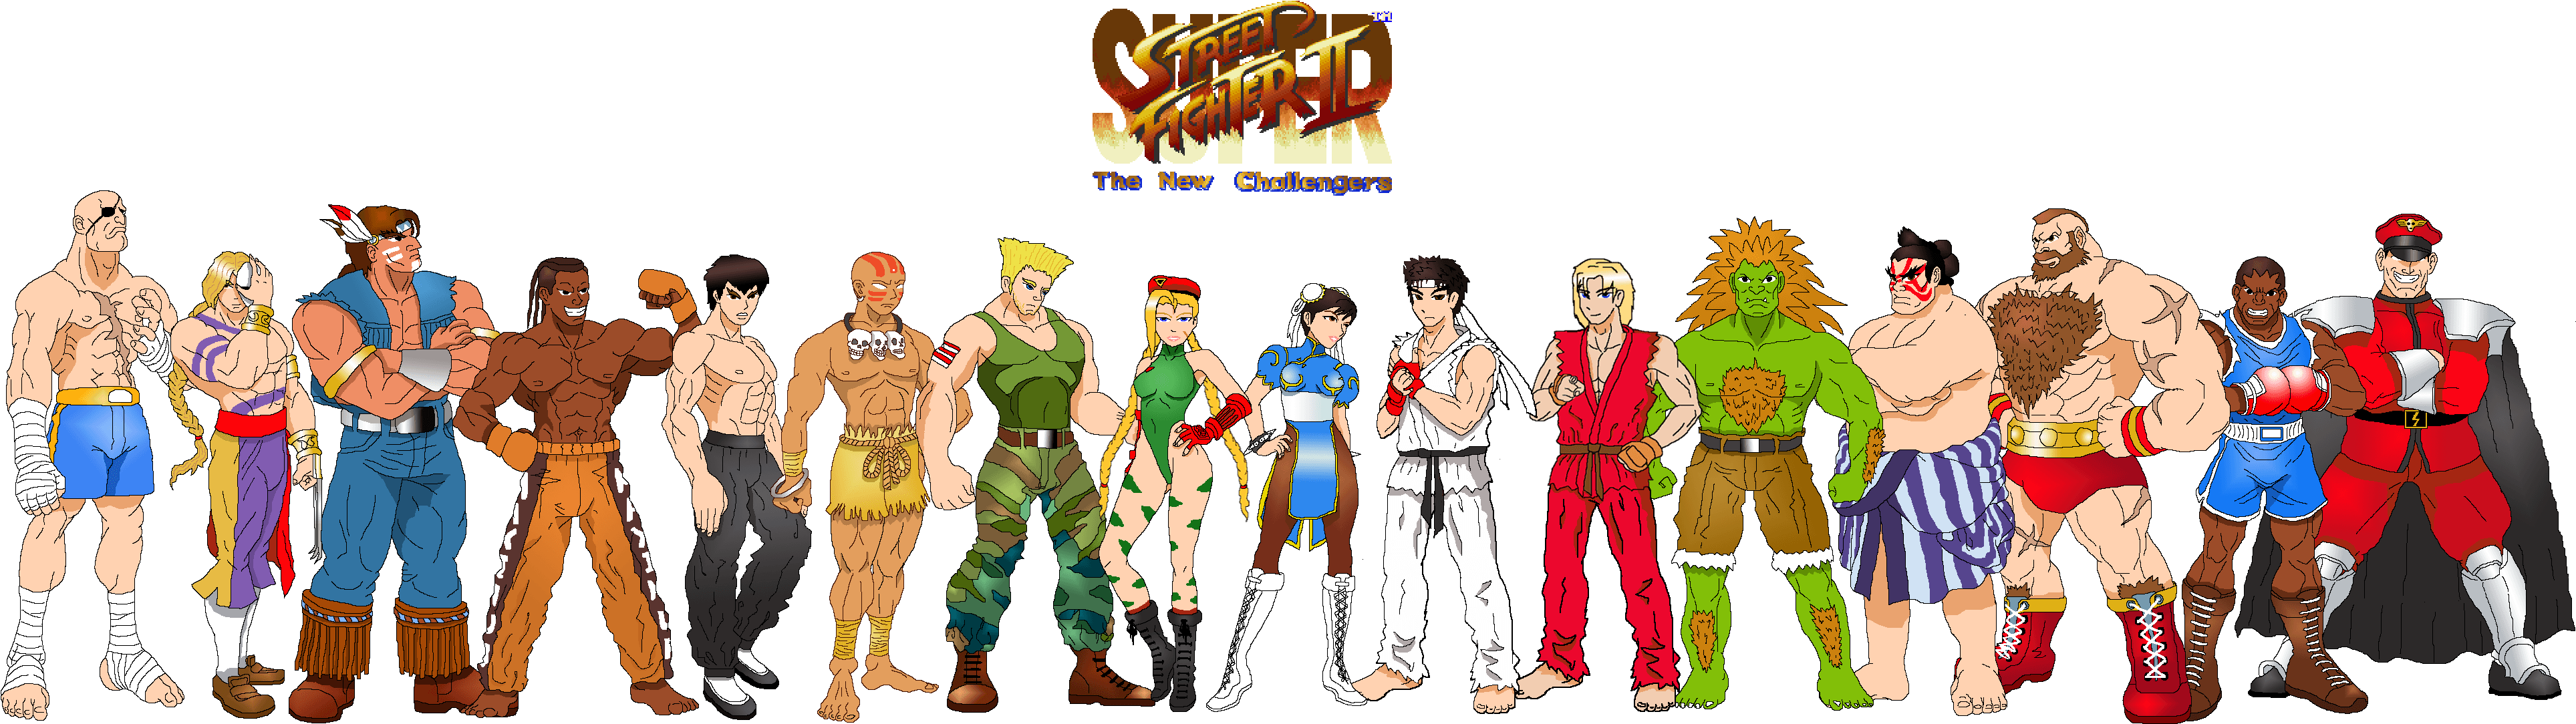 Street Fighter II No Background